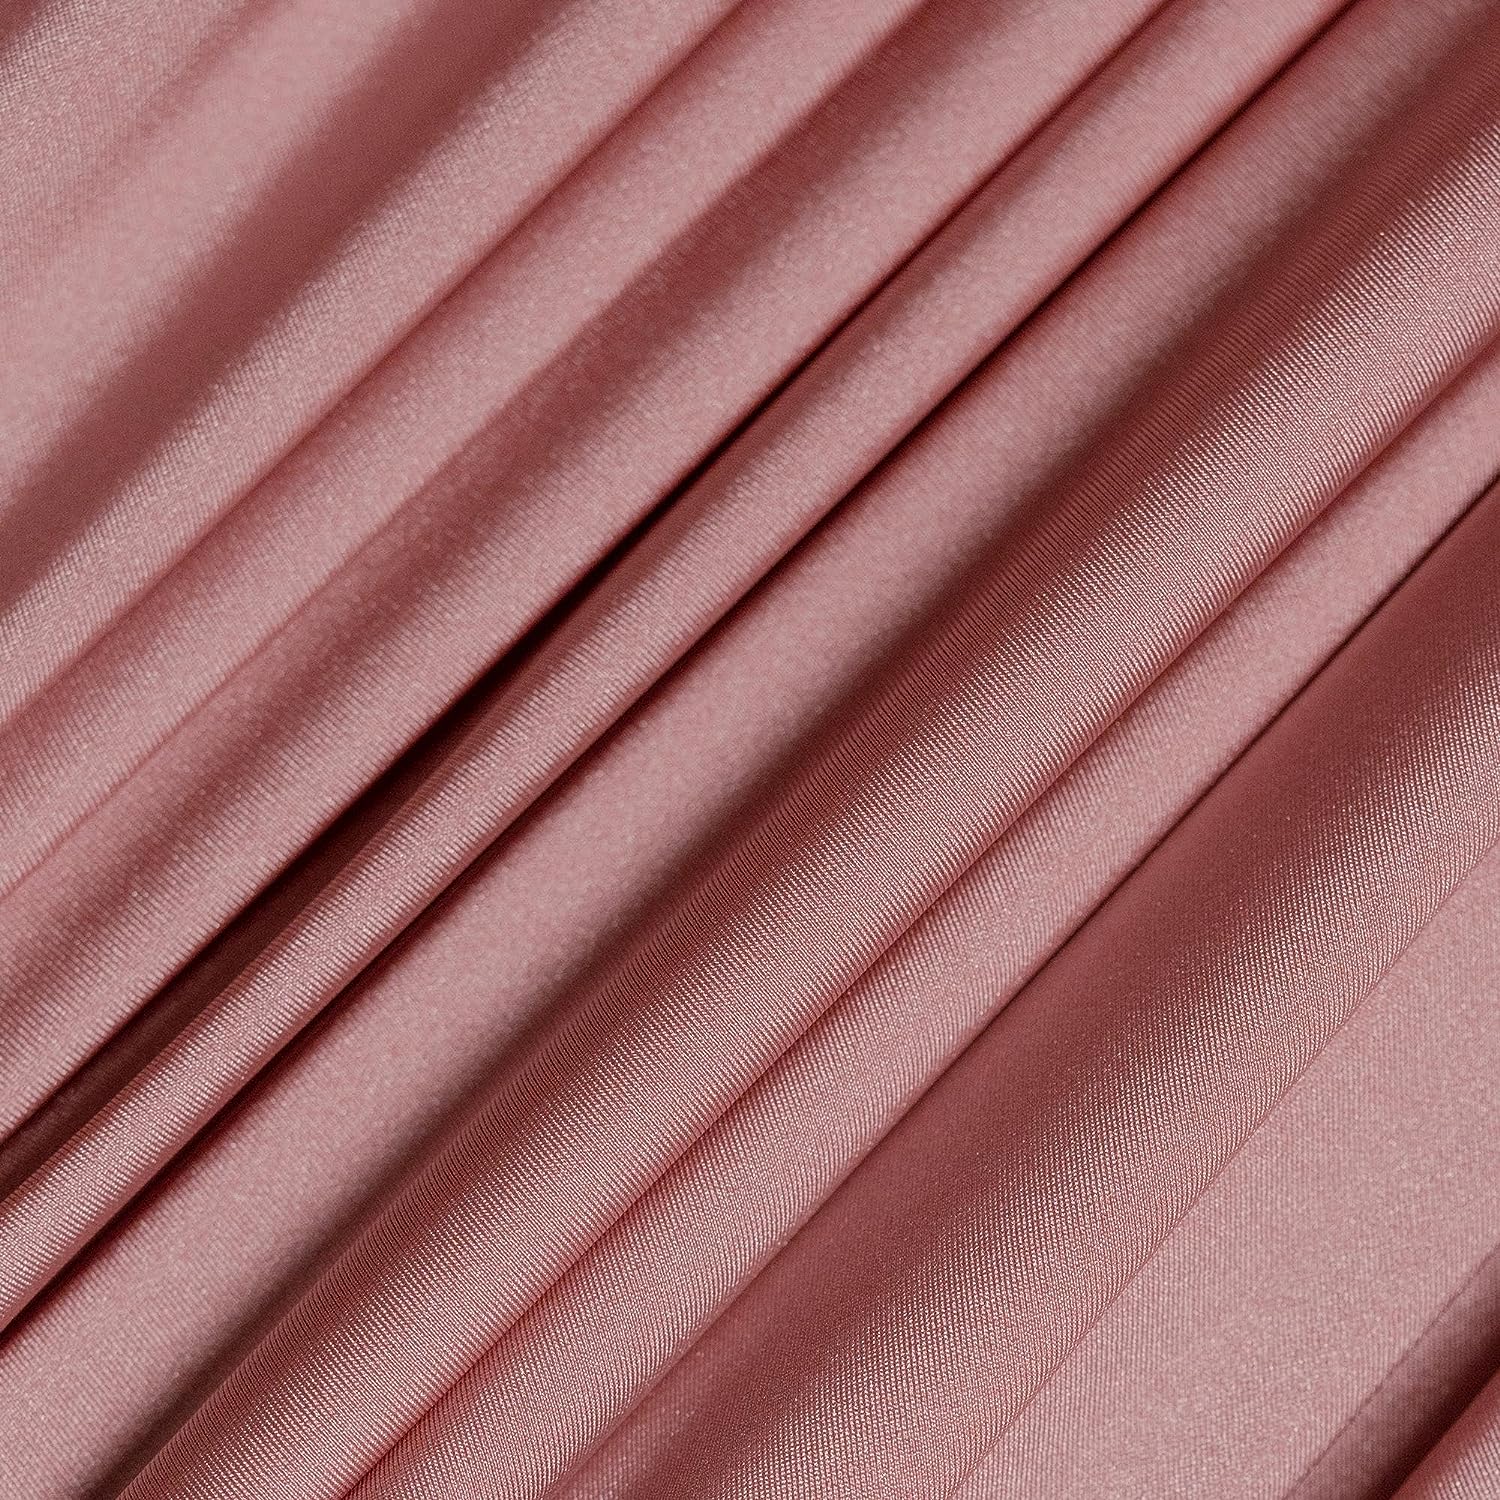 Swimsuit Fabric Nylon Spandex 4 Way Stretch ICE FABRICS